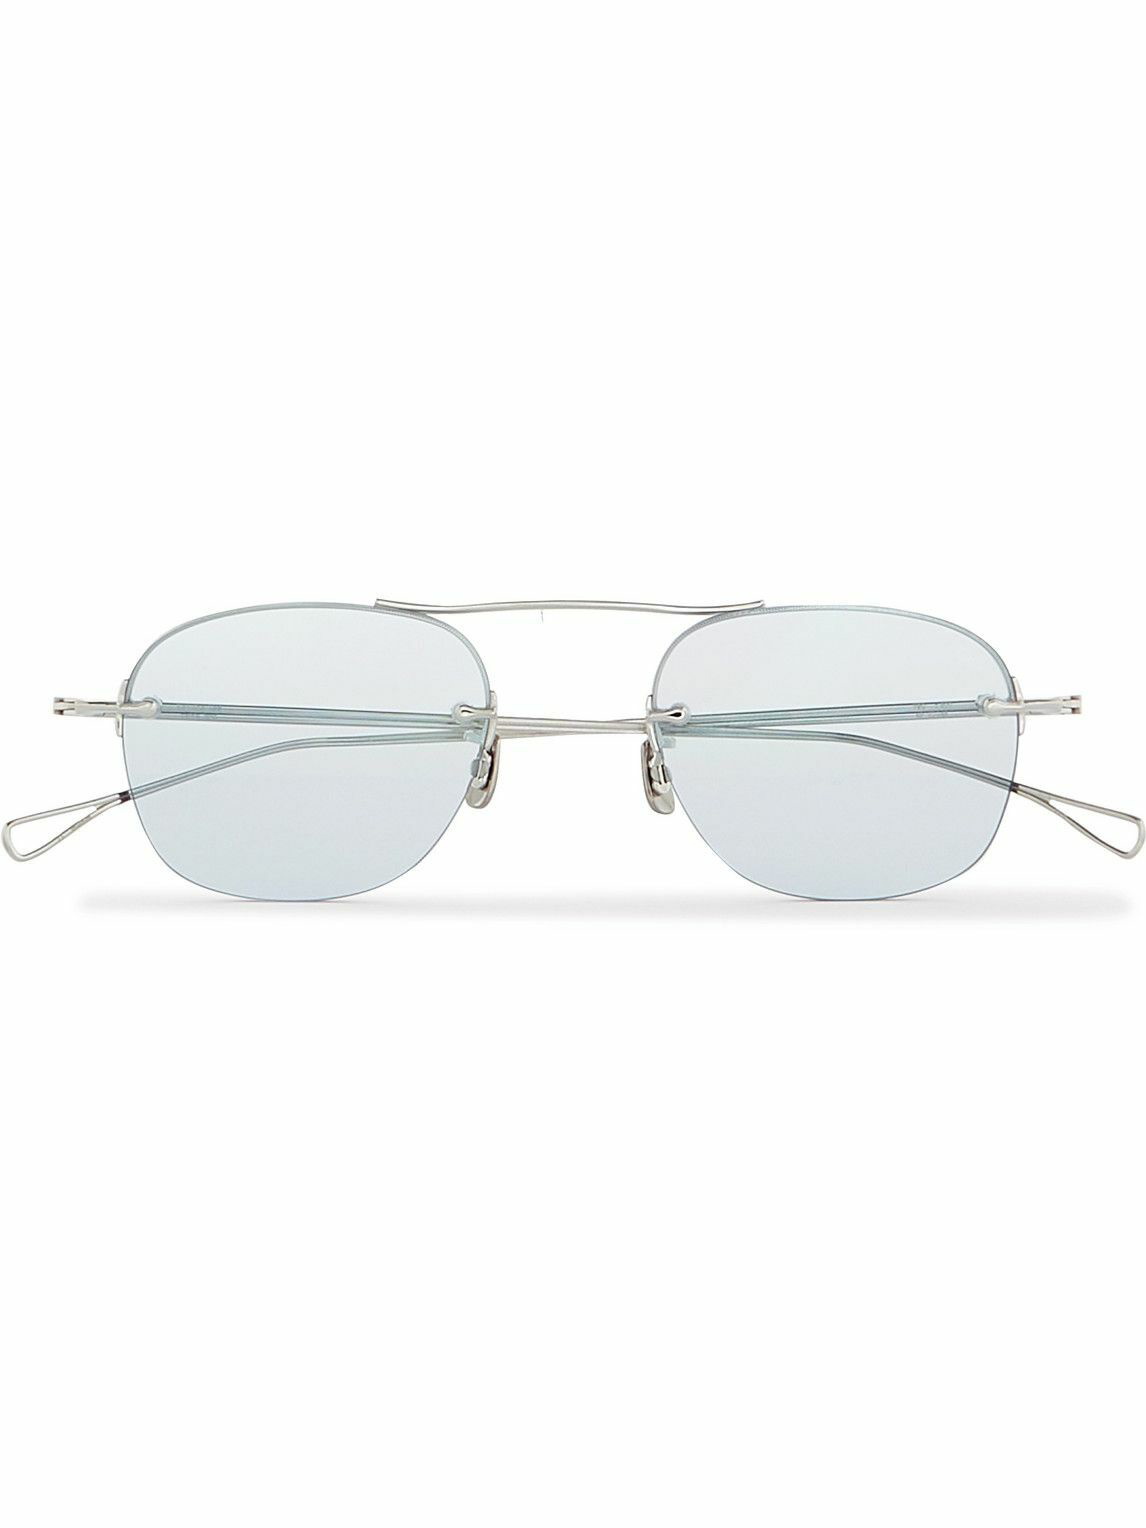 Photo: Eyevan 7285 - Aviator-Style Titanium Sunglasses